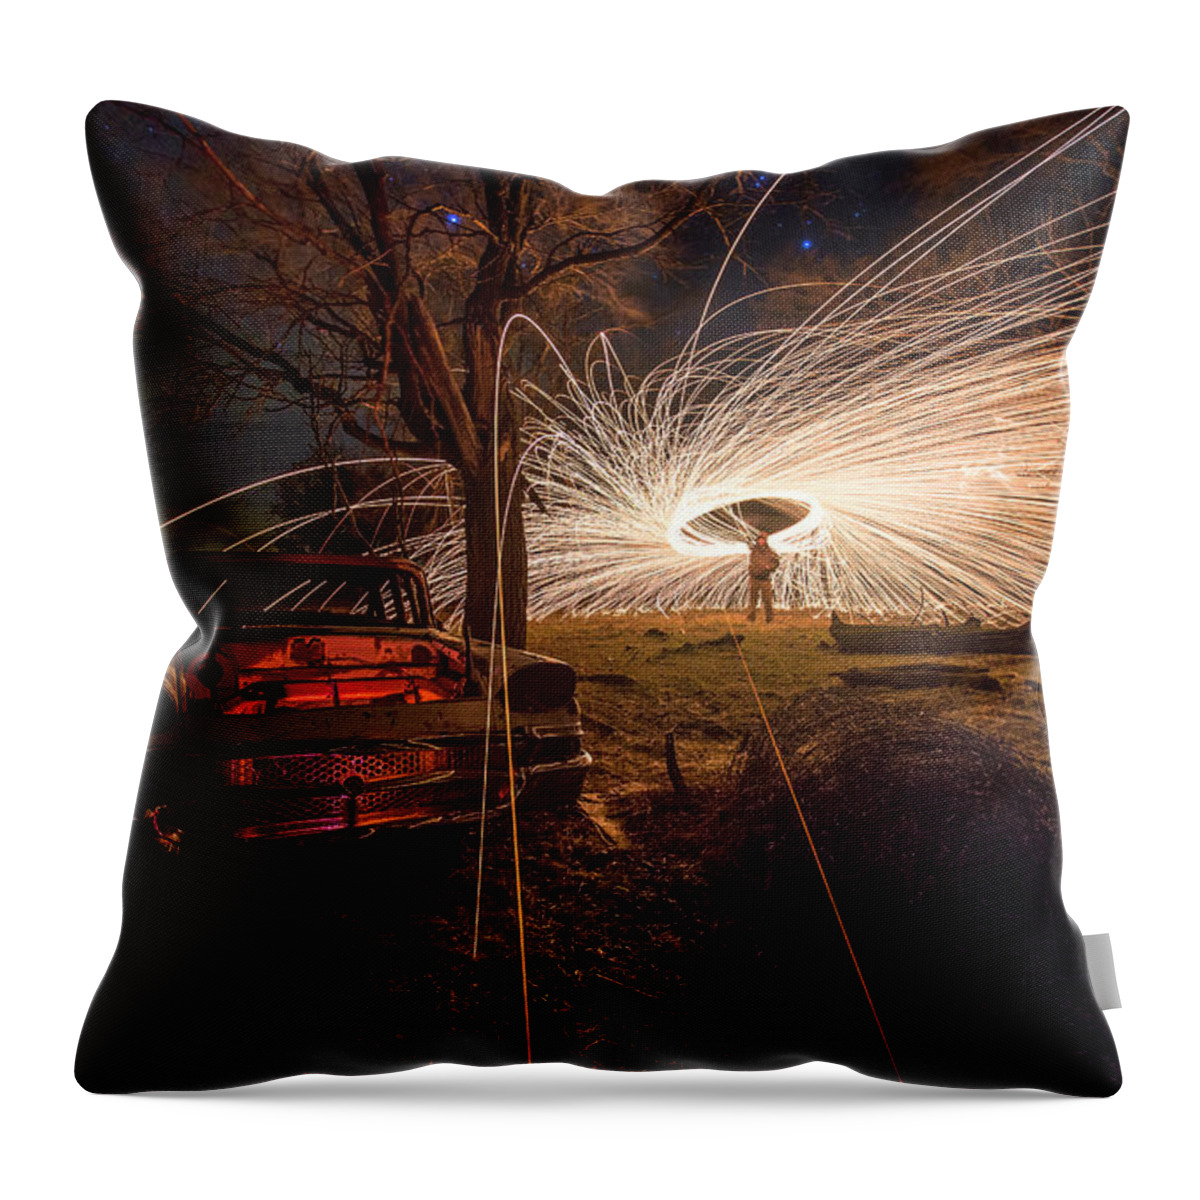 Supernatural Throw Pillow featuring the photograph Supernatural by Aaron J Groen